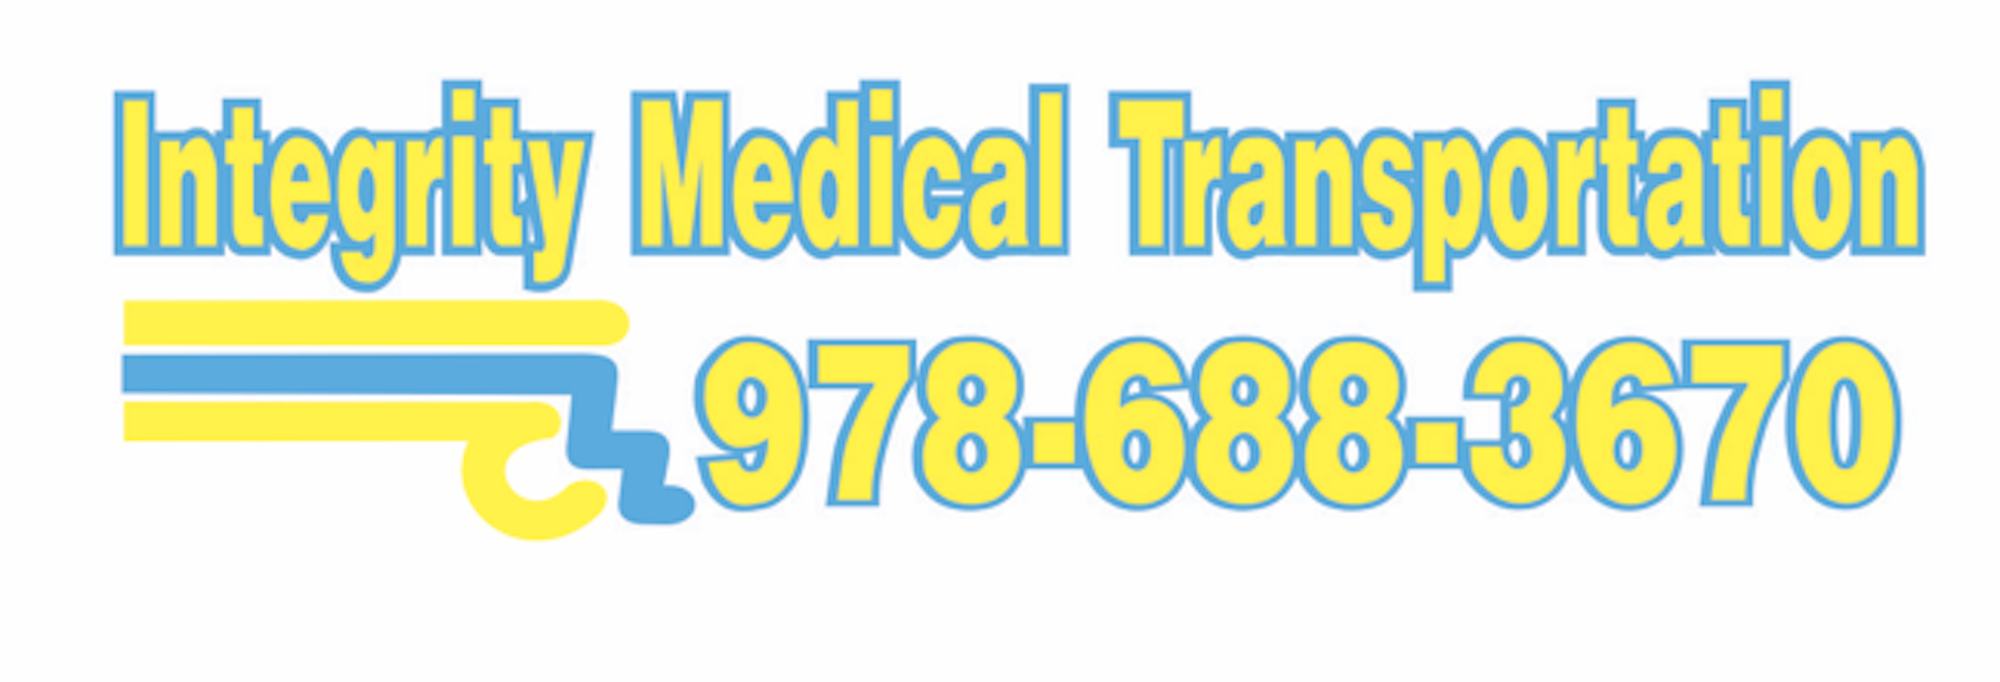 Integrity Medical Transportation